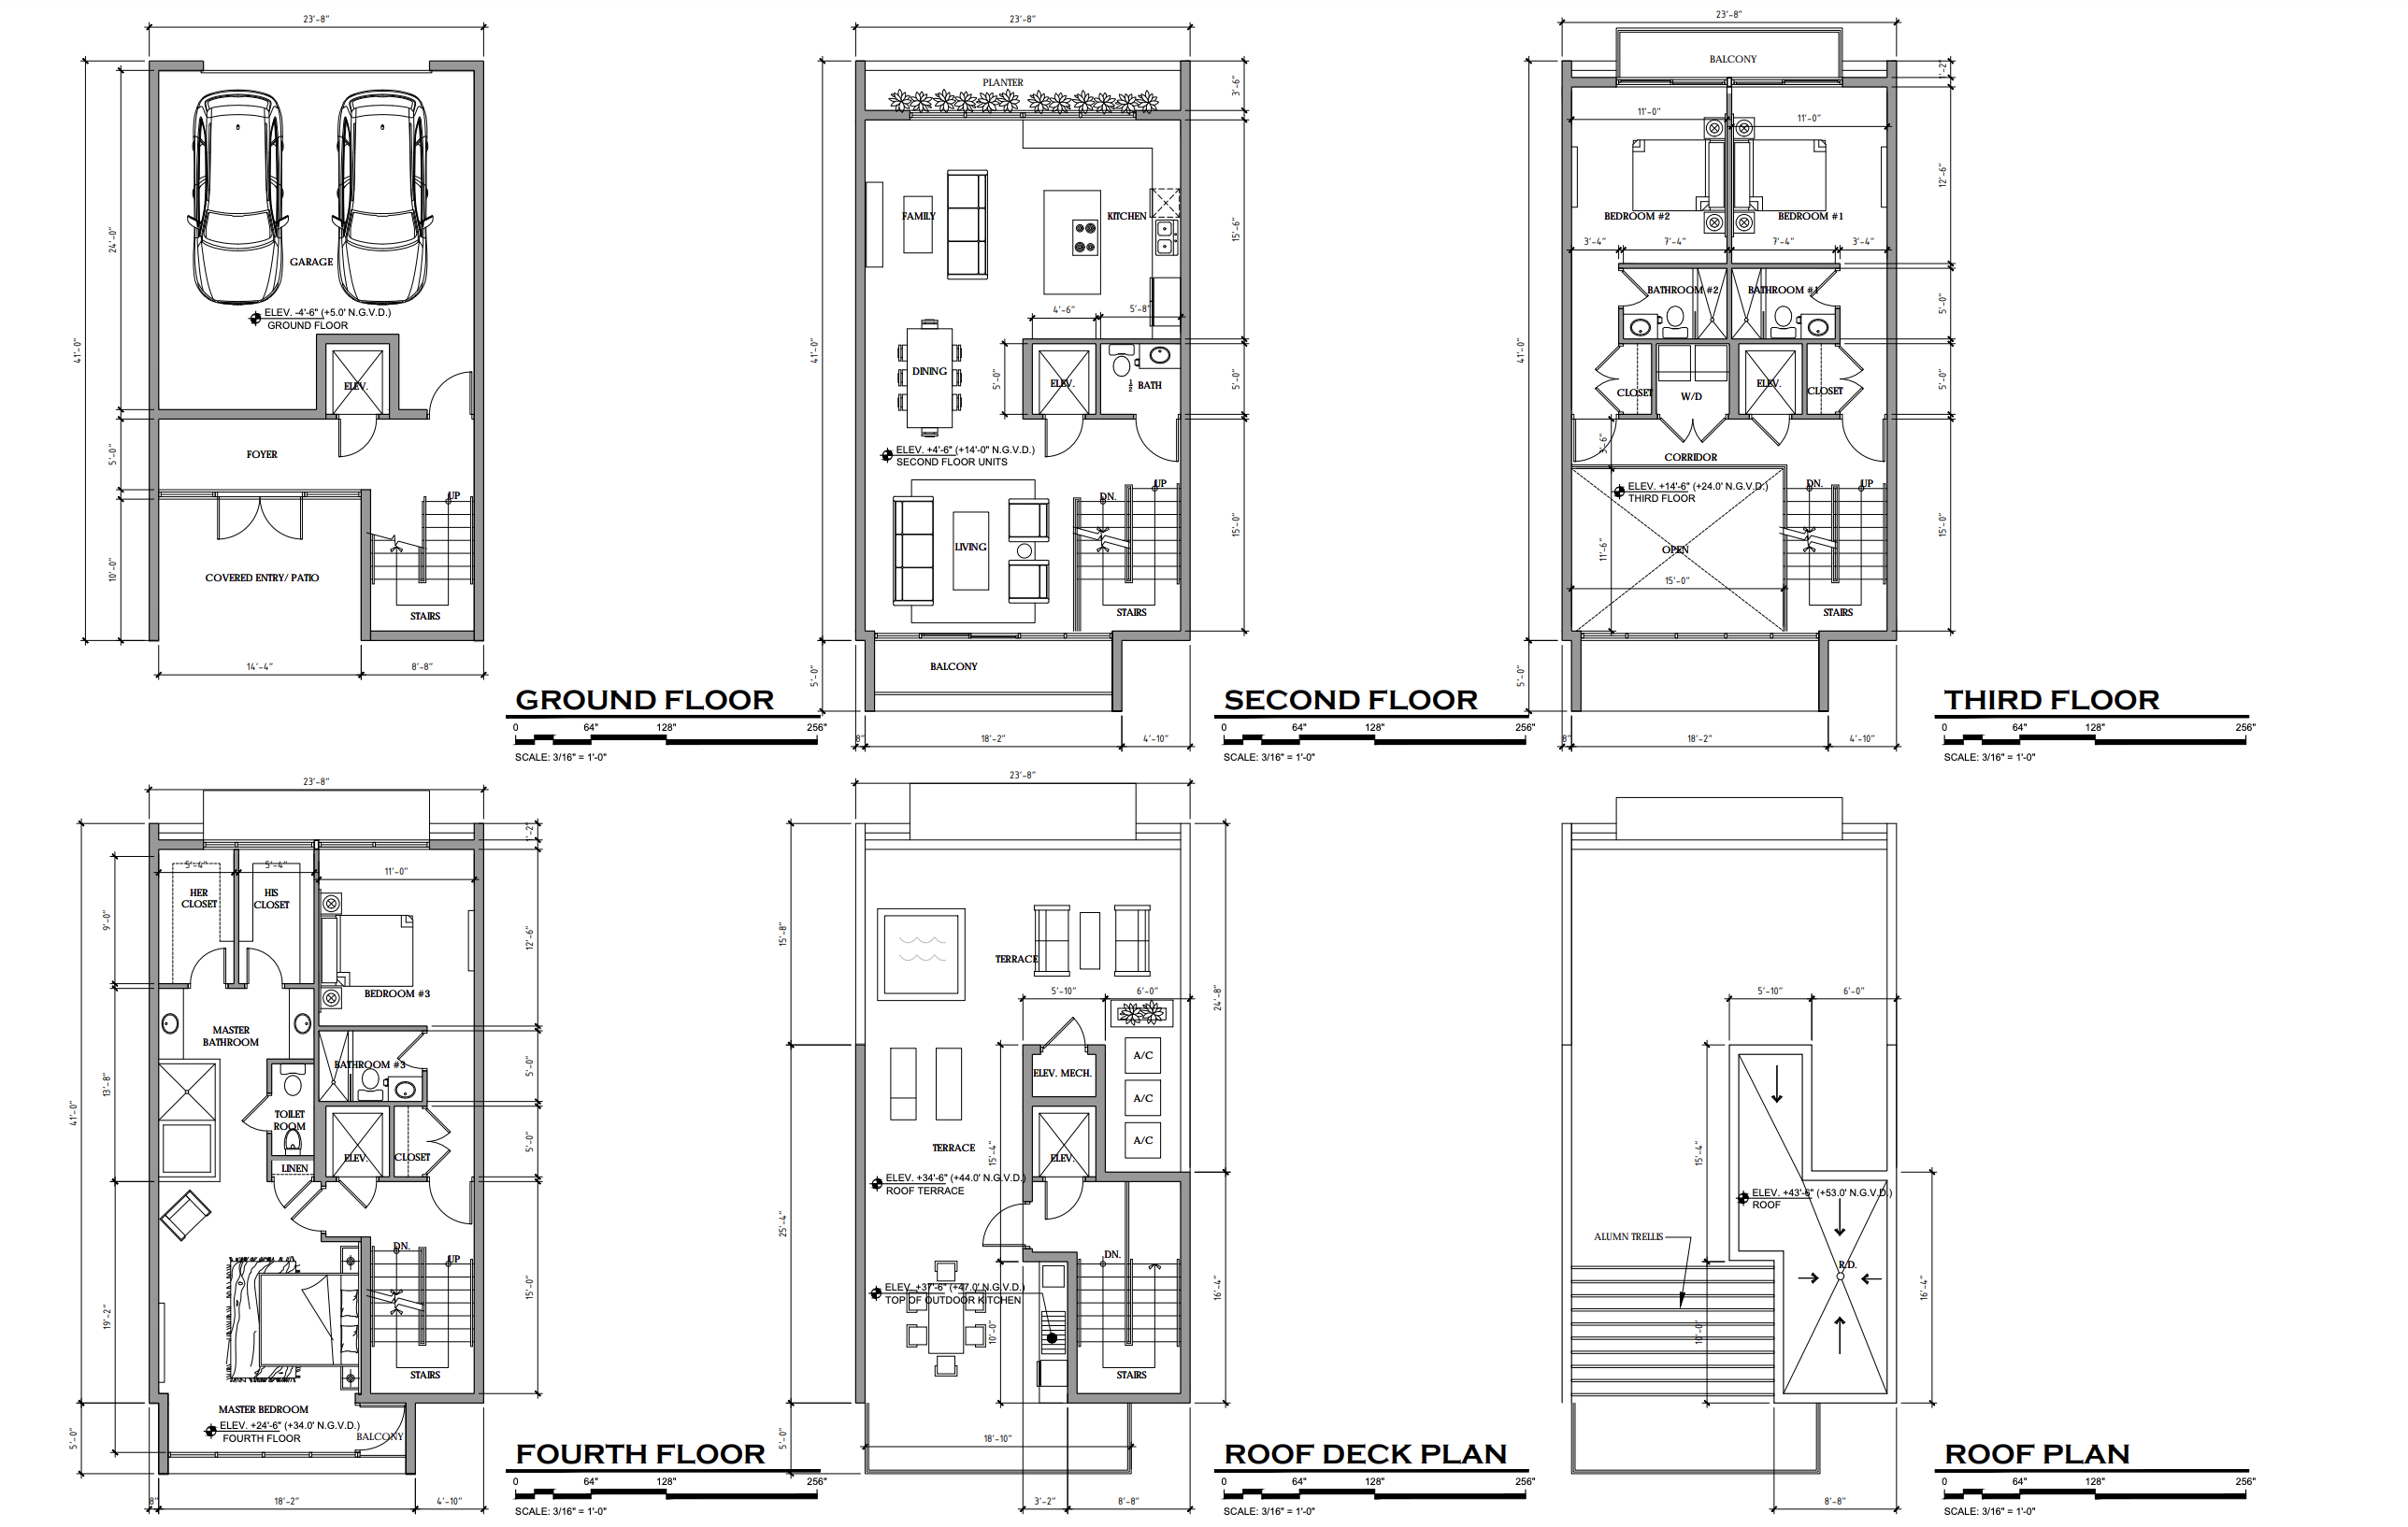 Unit B Floor Plan. Courtesy of DNB Design Group.